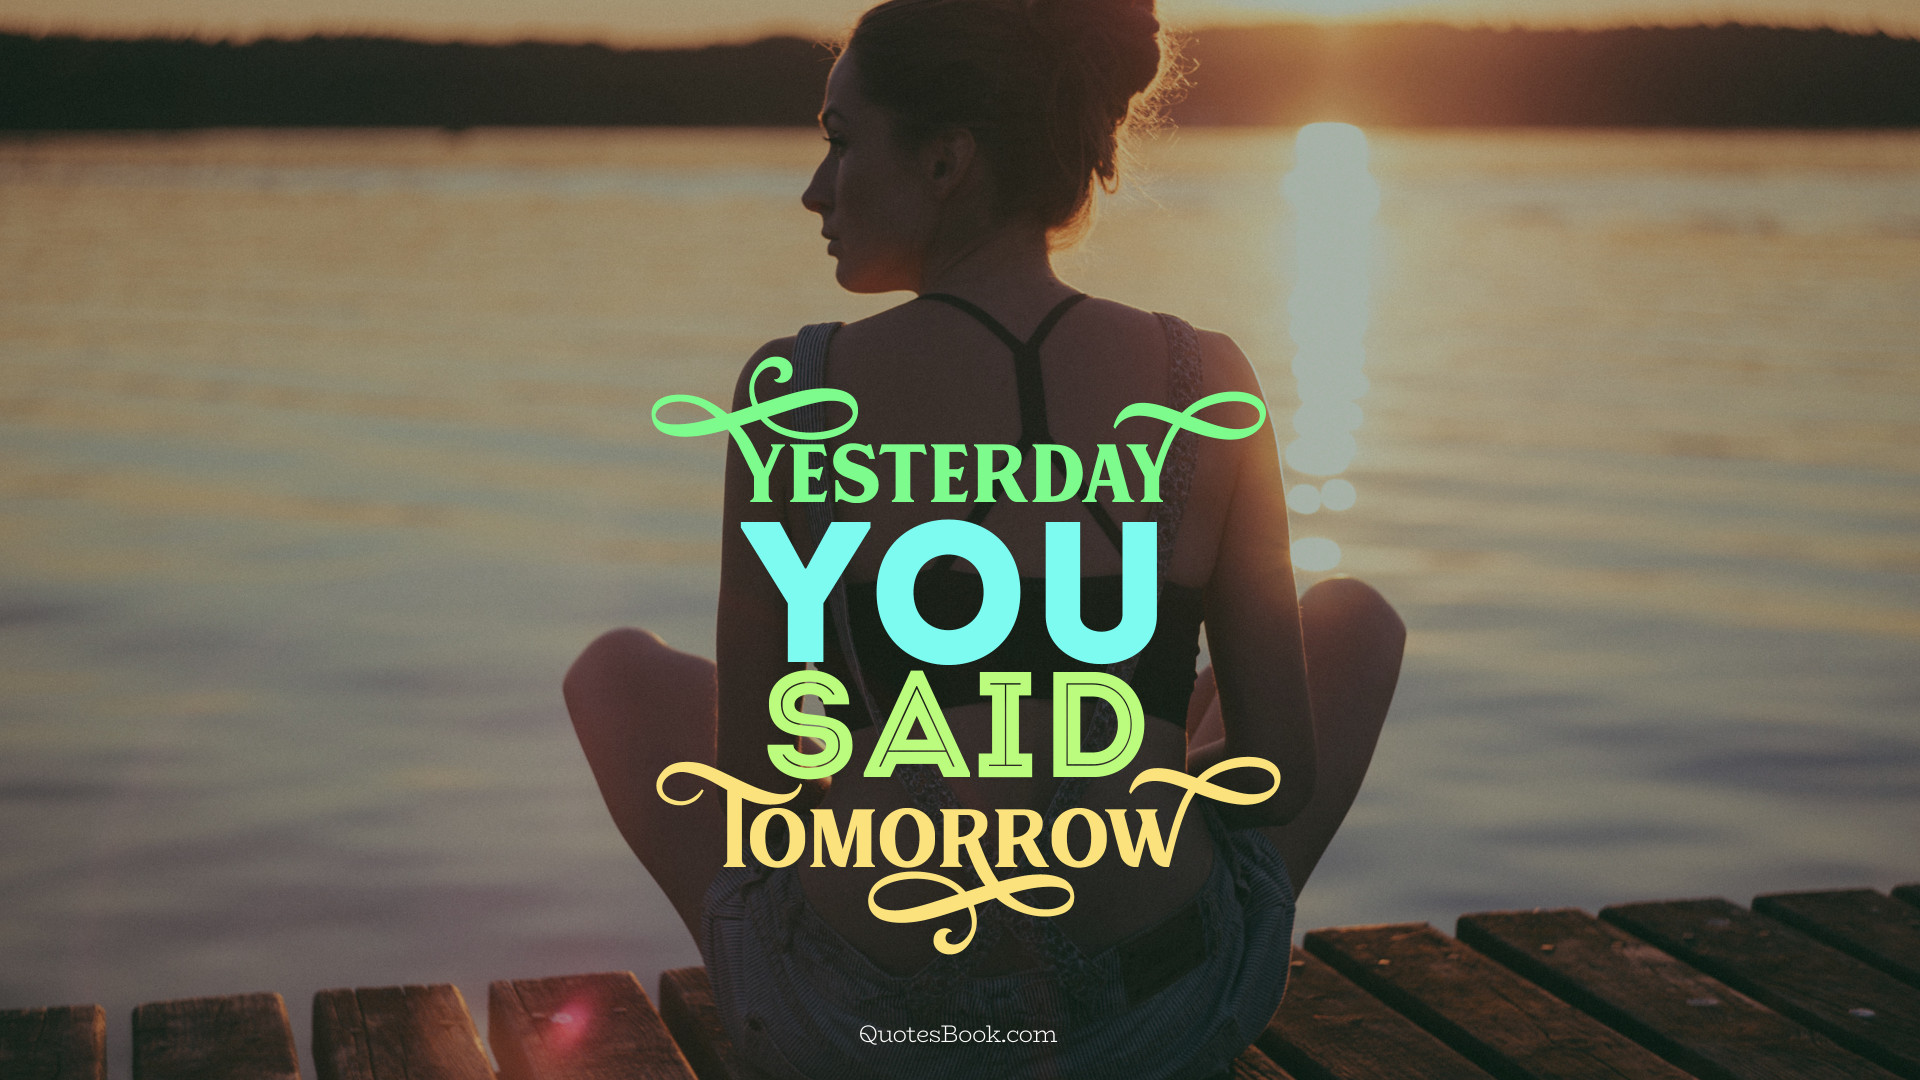 Yesterday you said tomorrow - QuotesBook